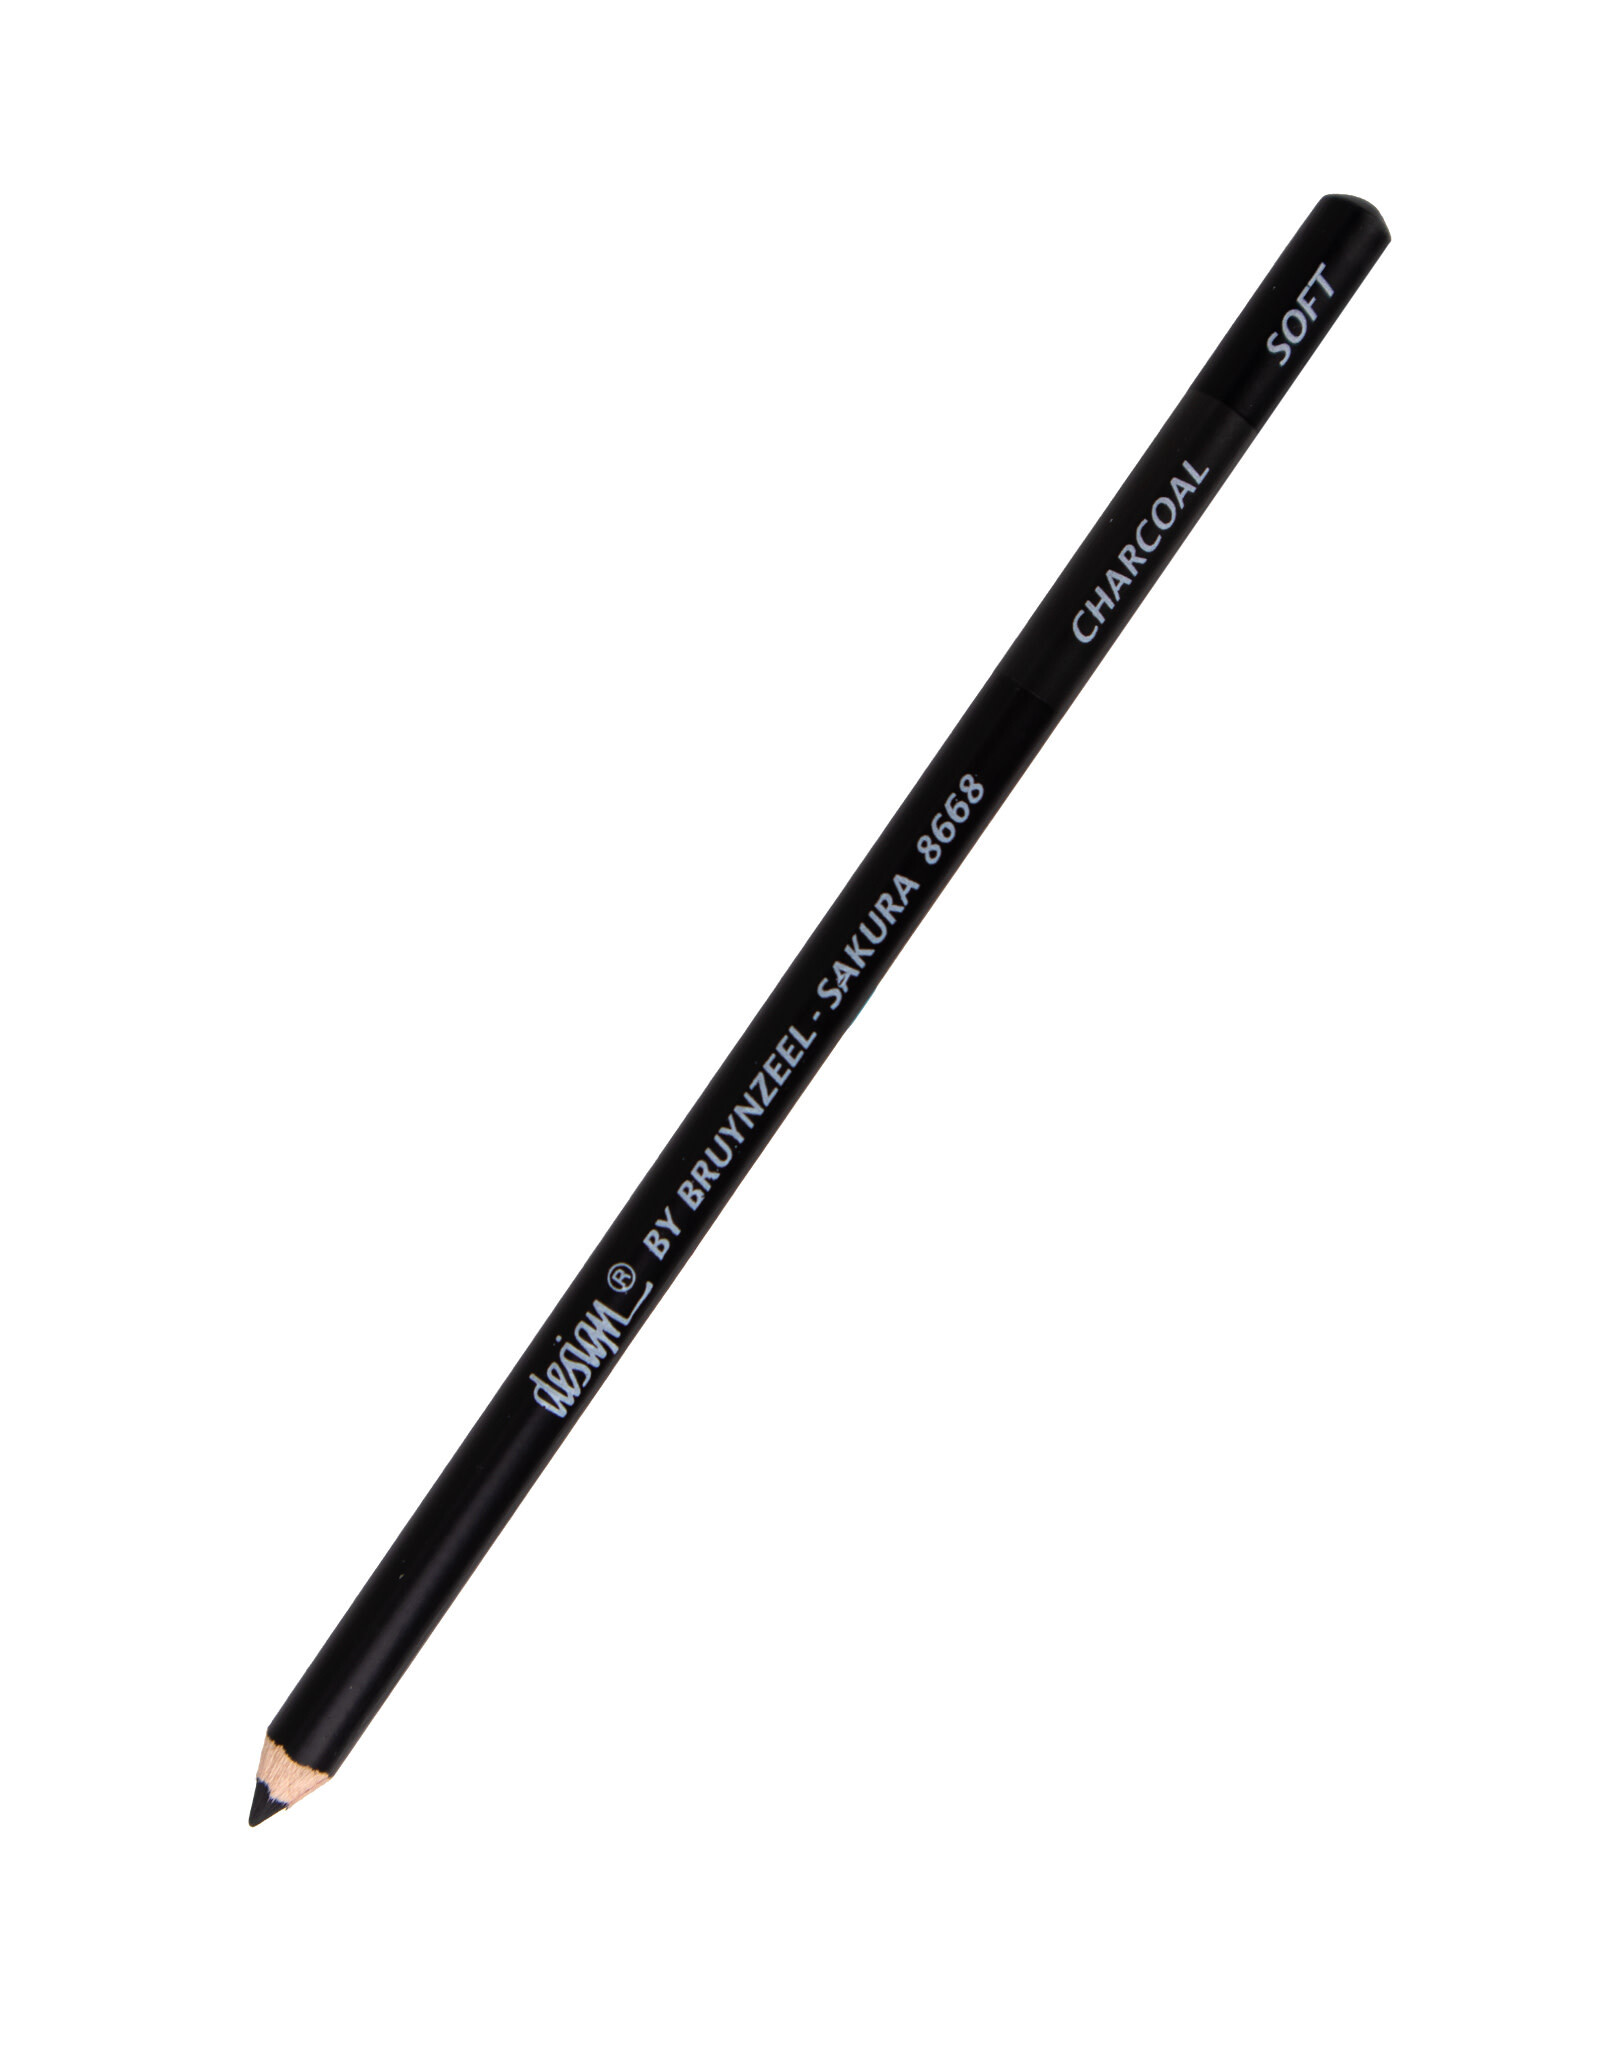 Royal Talens Bruynzeel Design Charcoal Pencil, Soft